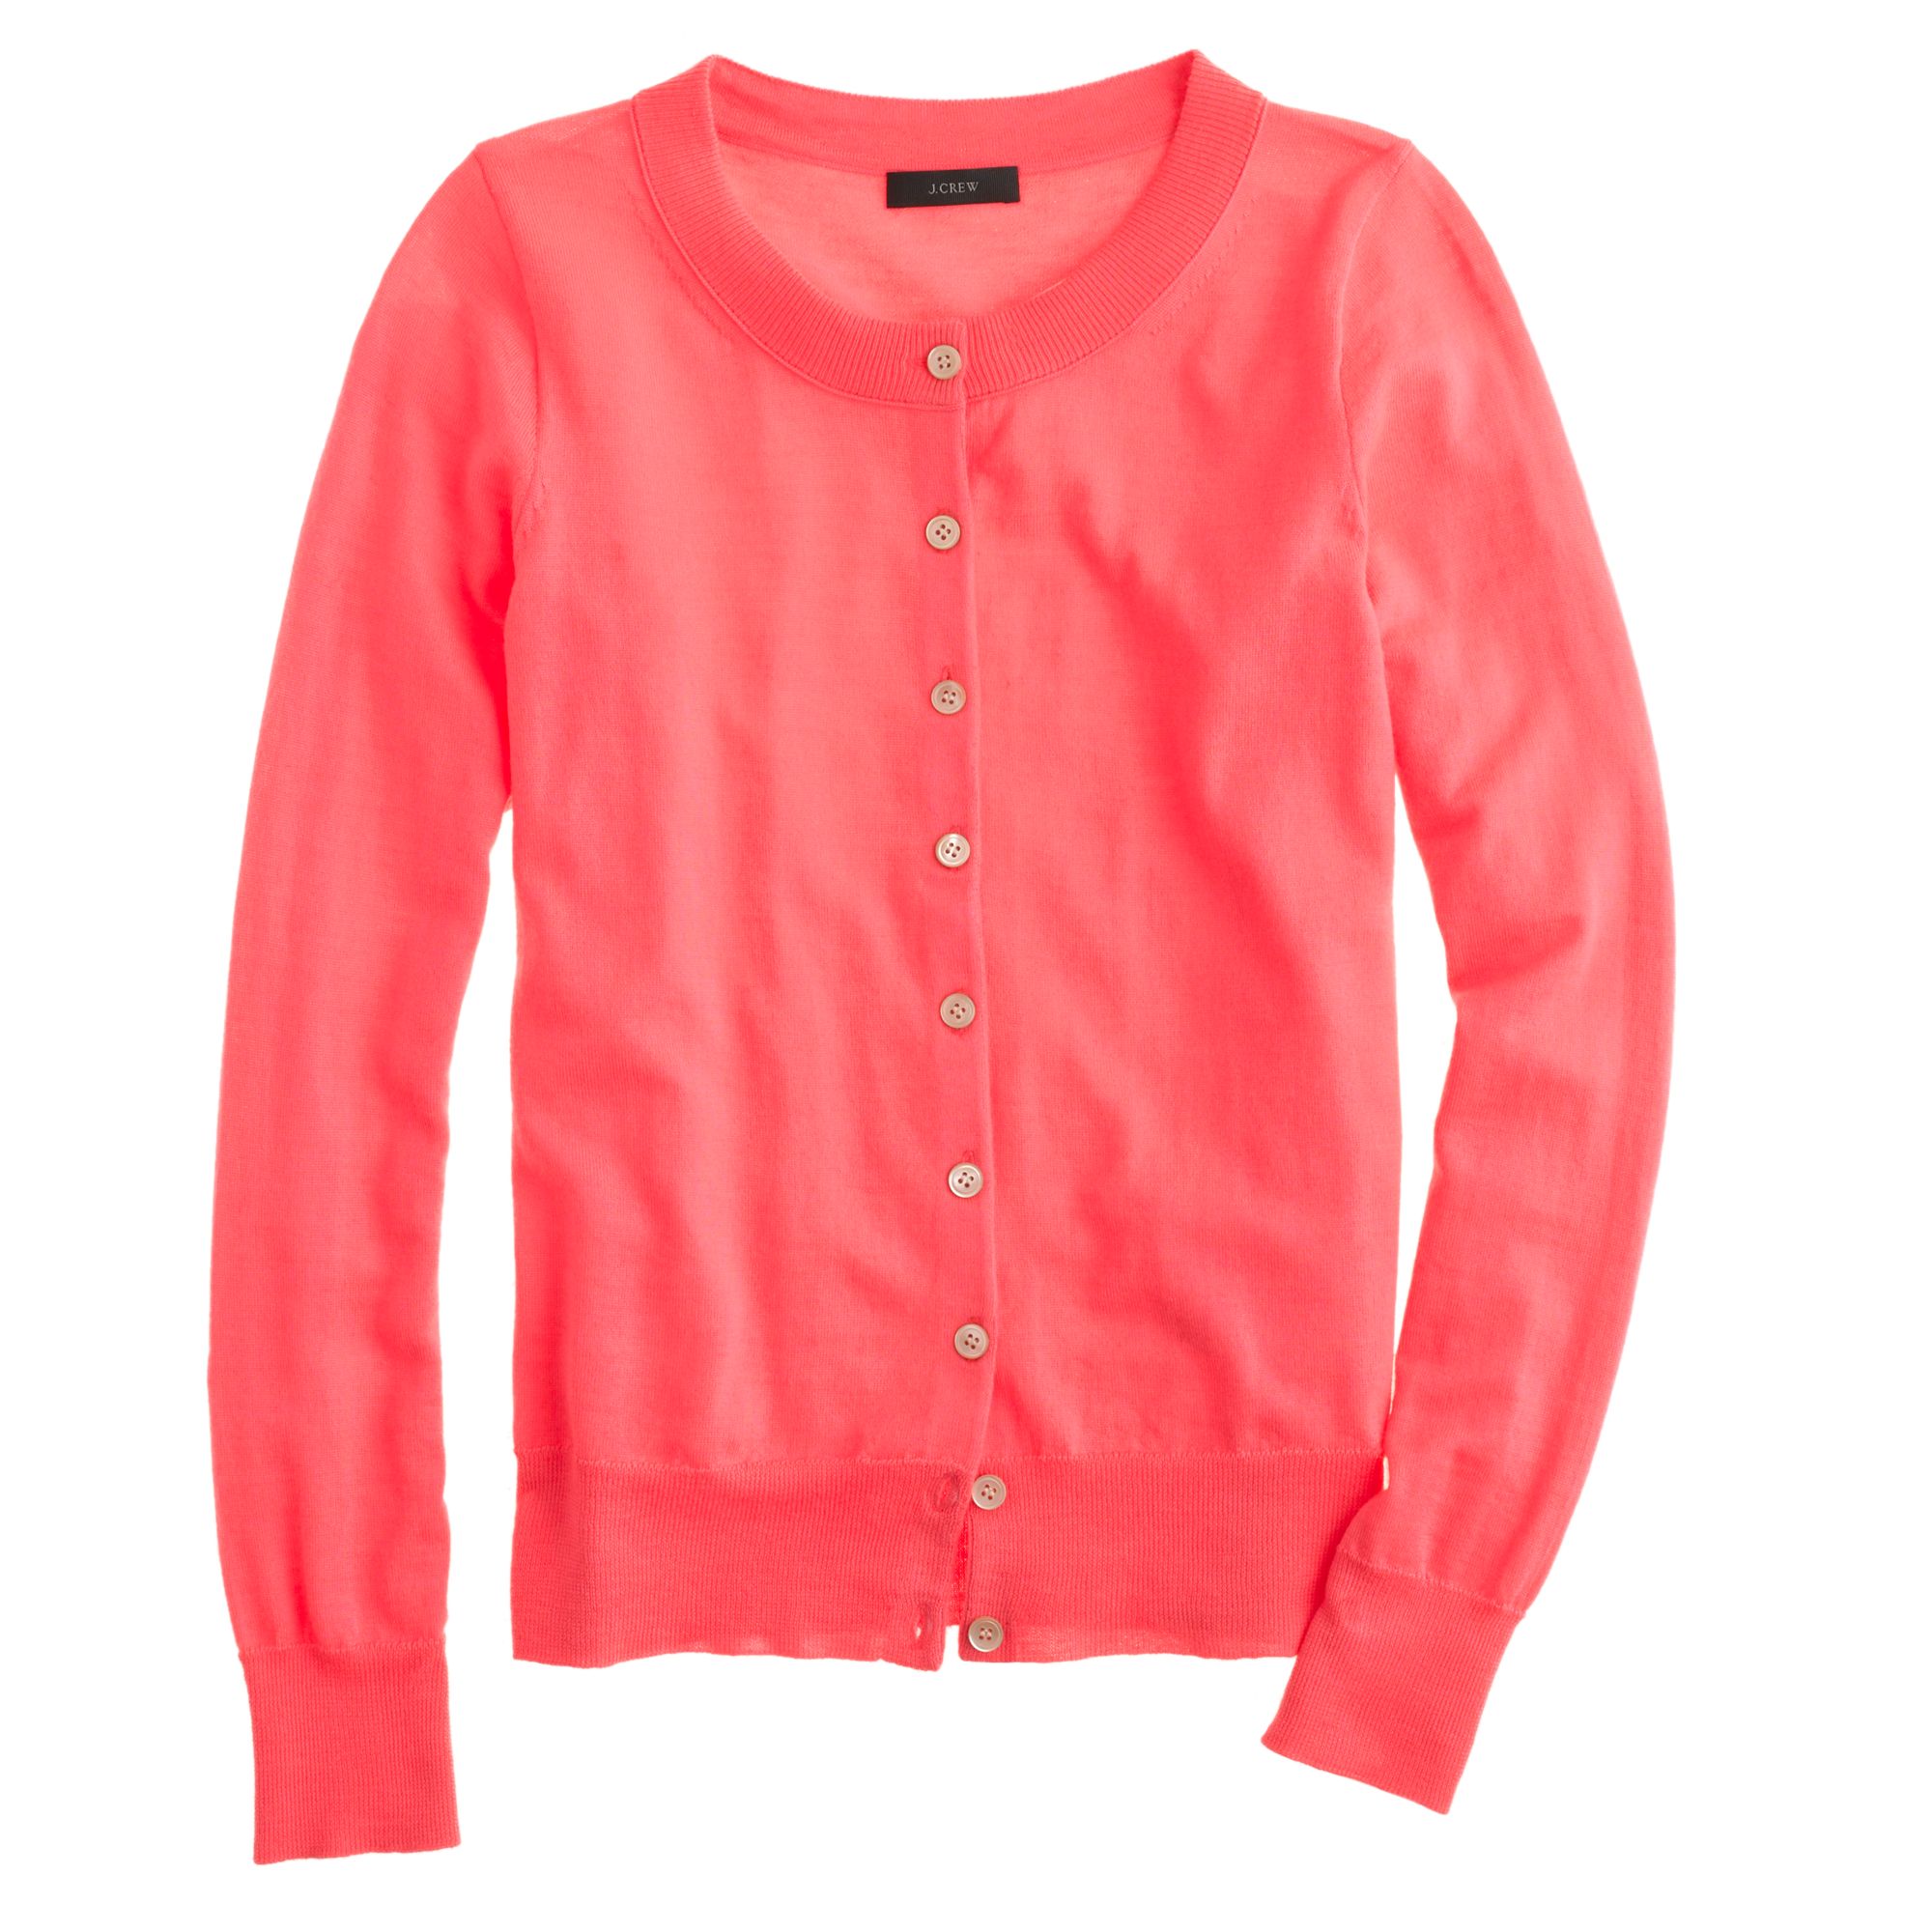 J.crew Merino Wool Tippi Cardigan Sweater in Pink | Lyst